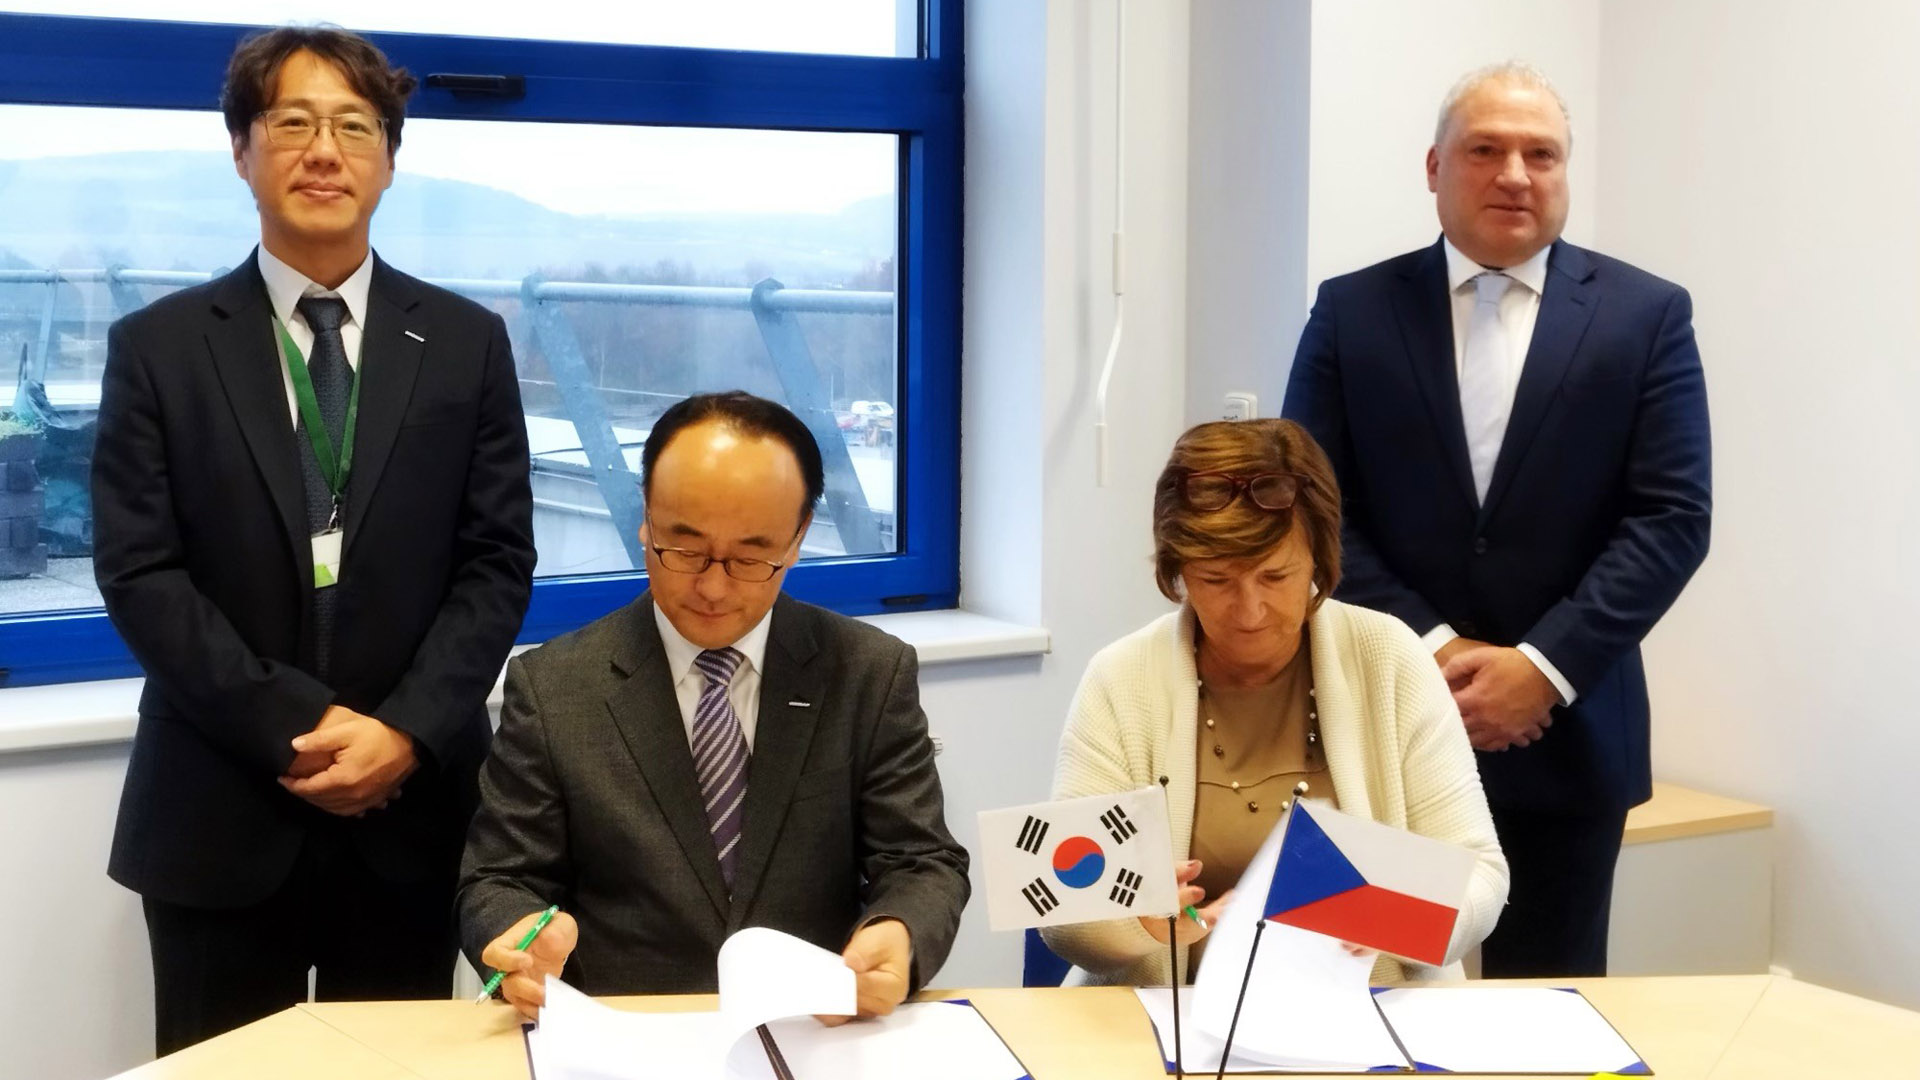 ZAT podepsal strategickou dohodu s jihokorejským Doosan Enerbility o spolupráci na jaderných zakázkách 